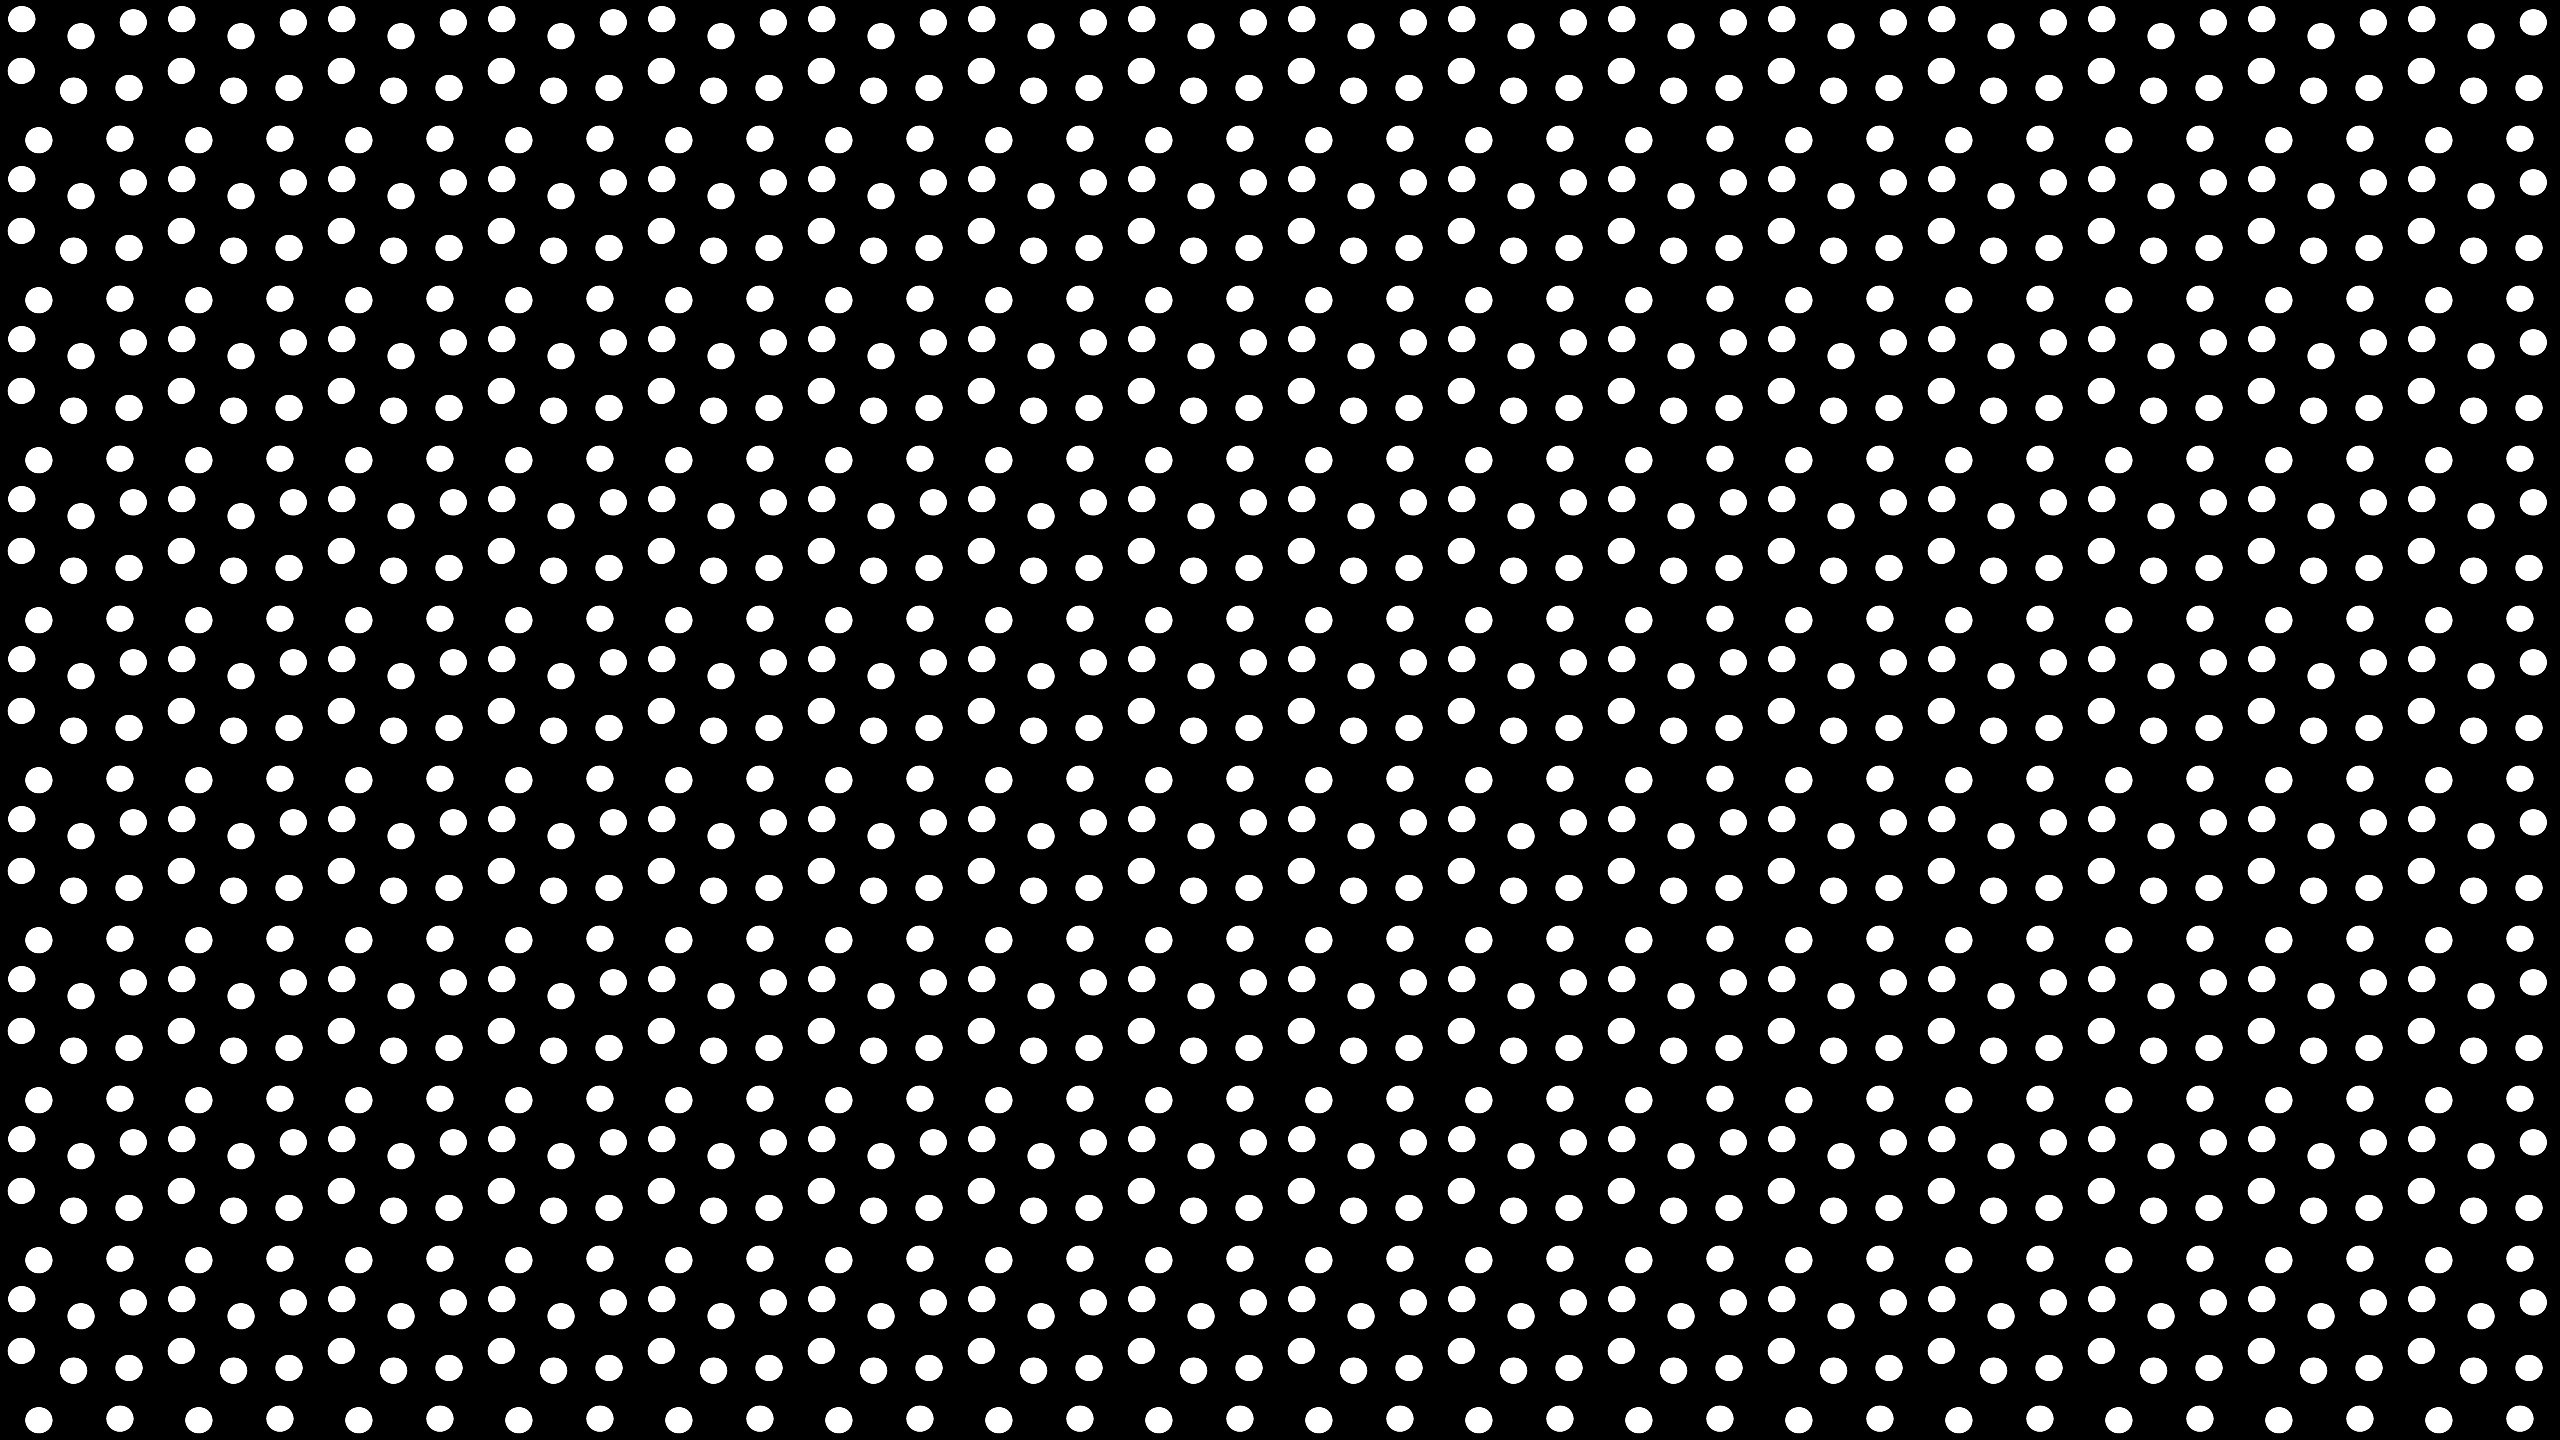  Polka  Dot  wallpaper    Download free cool High Resolution 